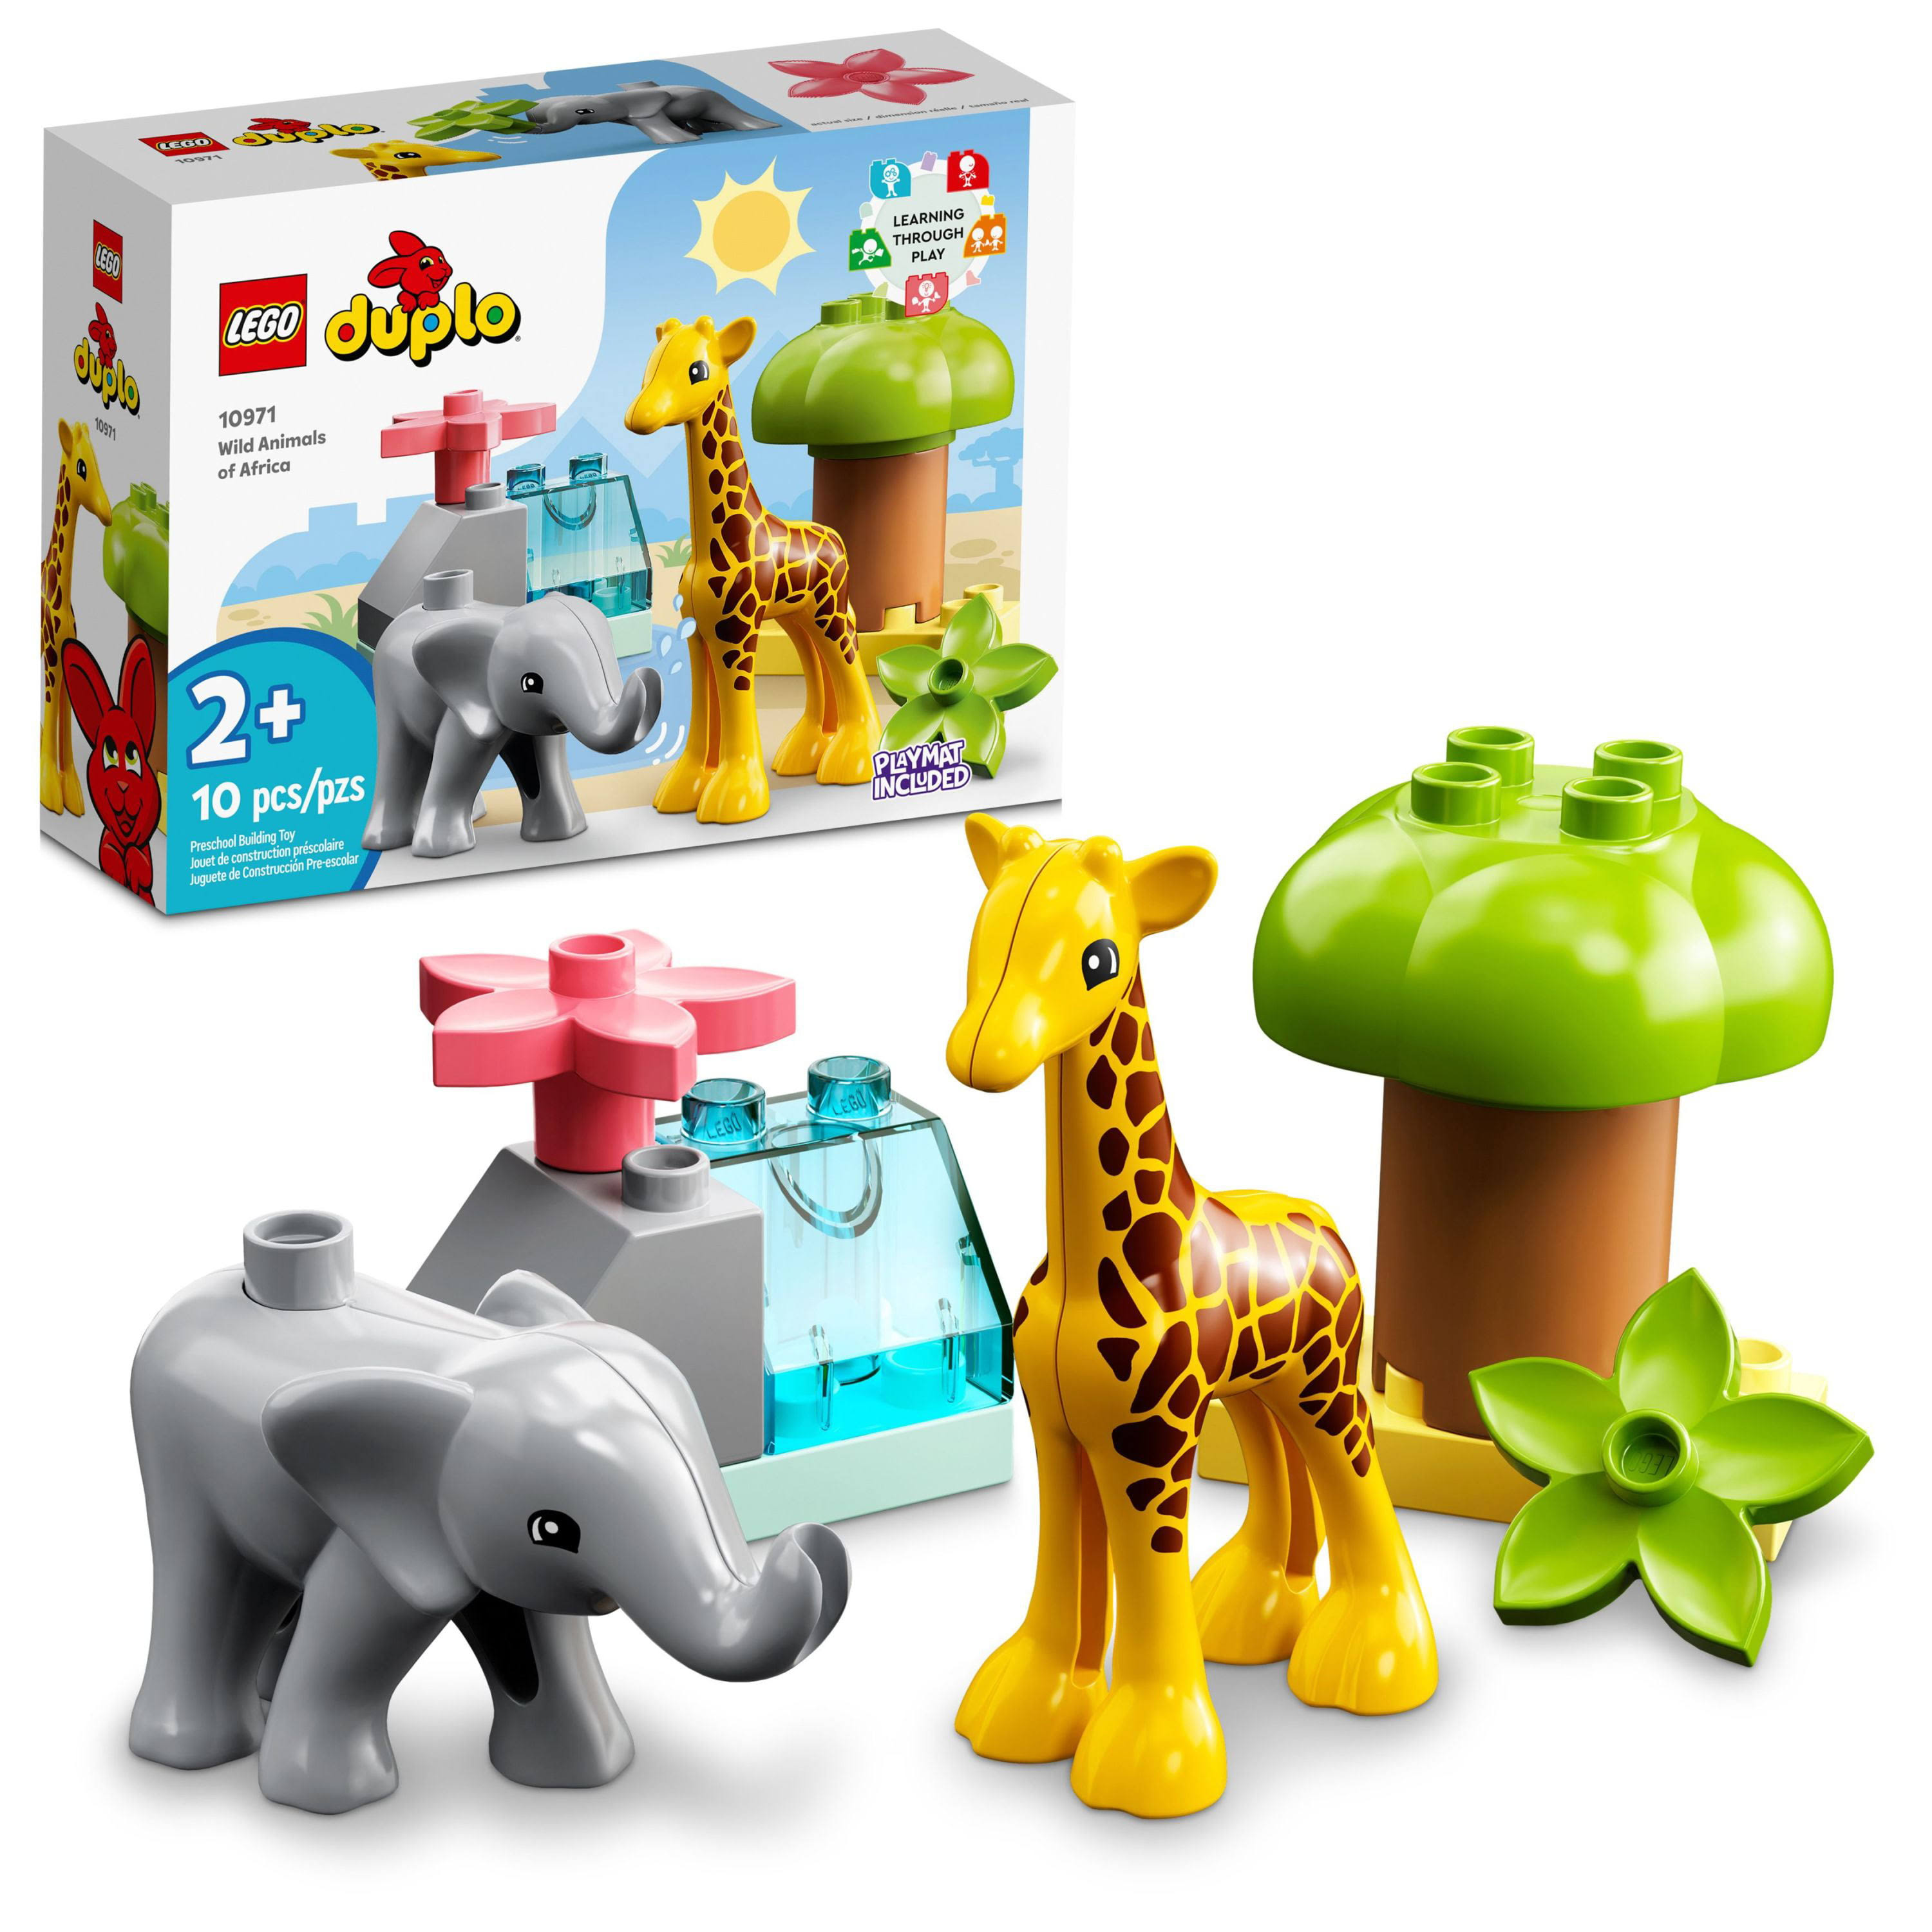 LEGO DUPLO Wild Animals of Africa 10971 Safari Building Toy Set For